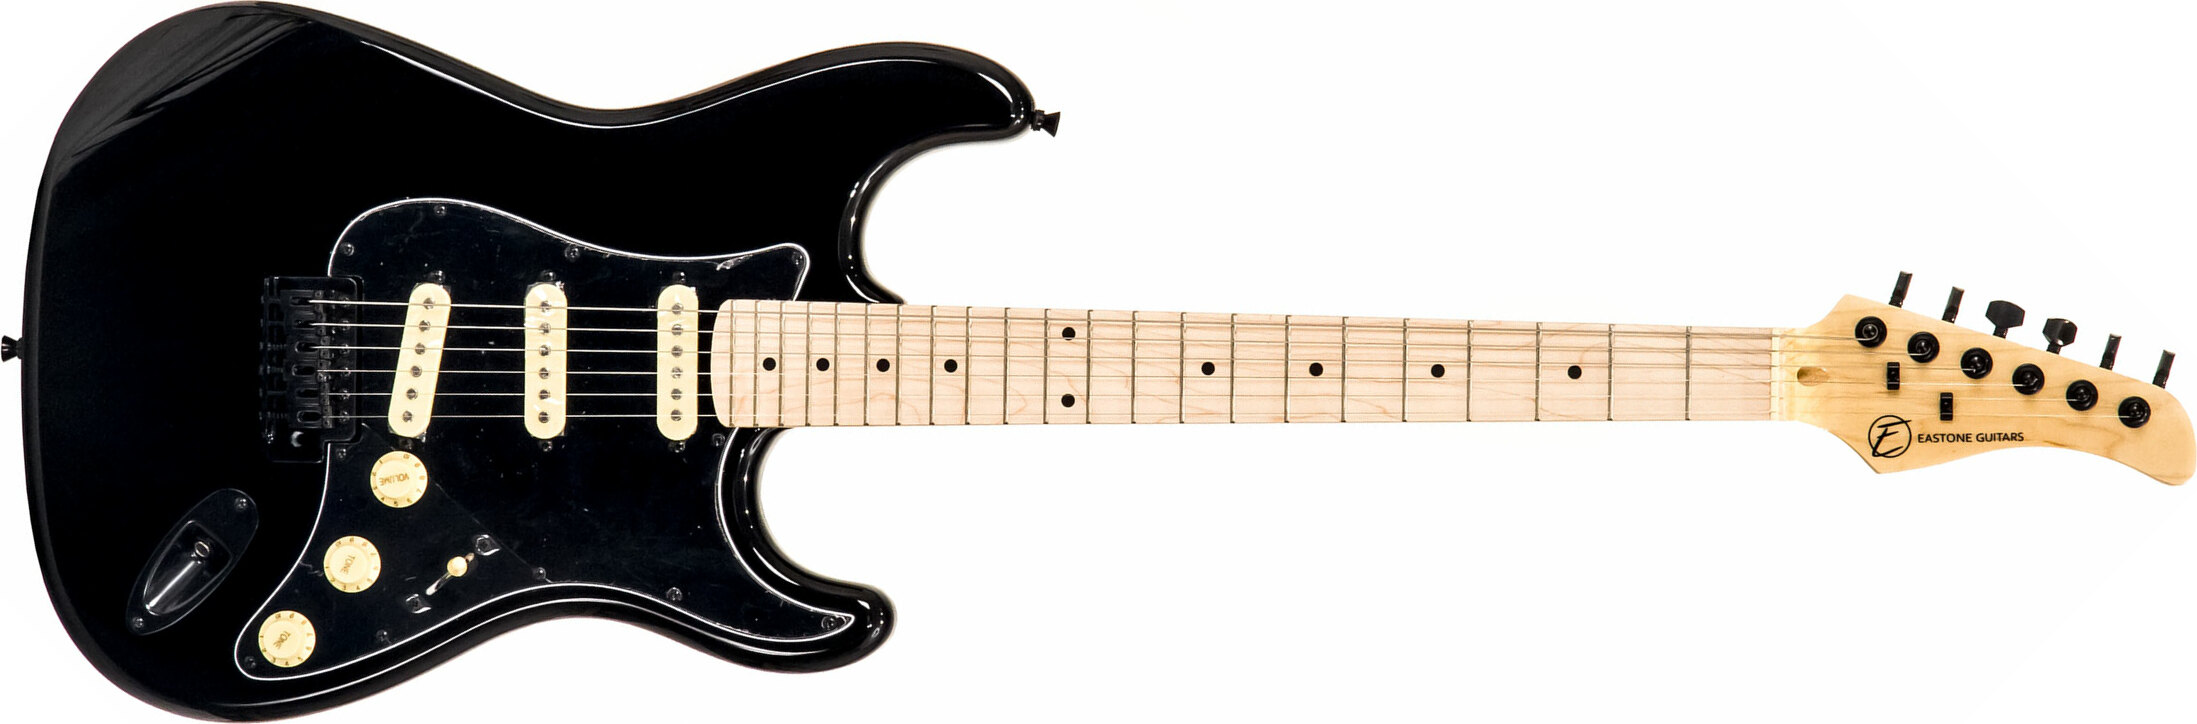 Eastone Str70 Gil Sss Trem Mn - Black - Guitarra eléctrica con forma de str. - Main picture